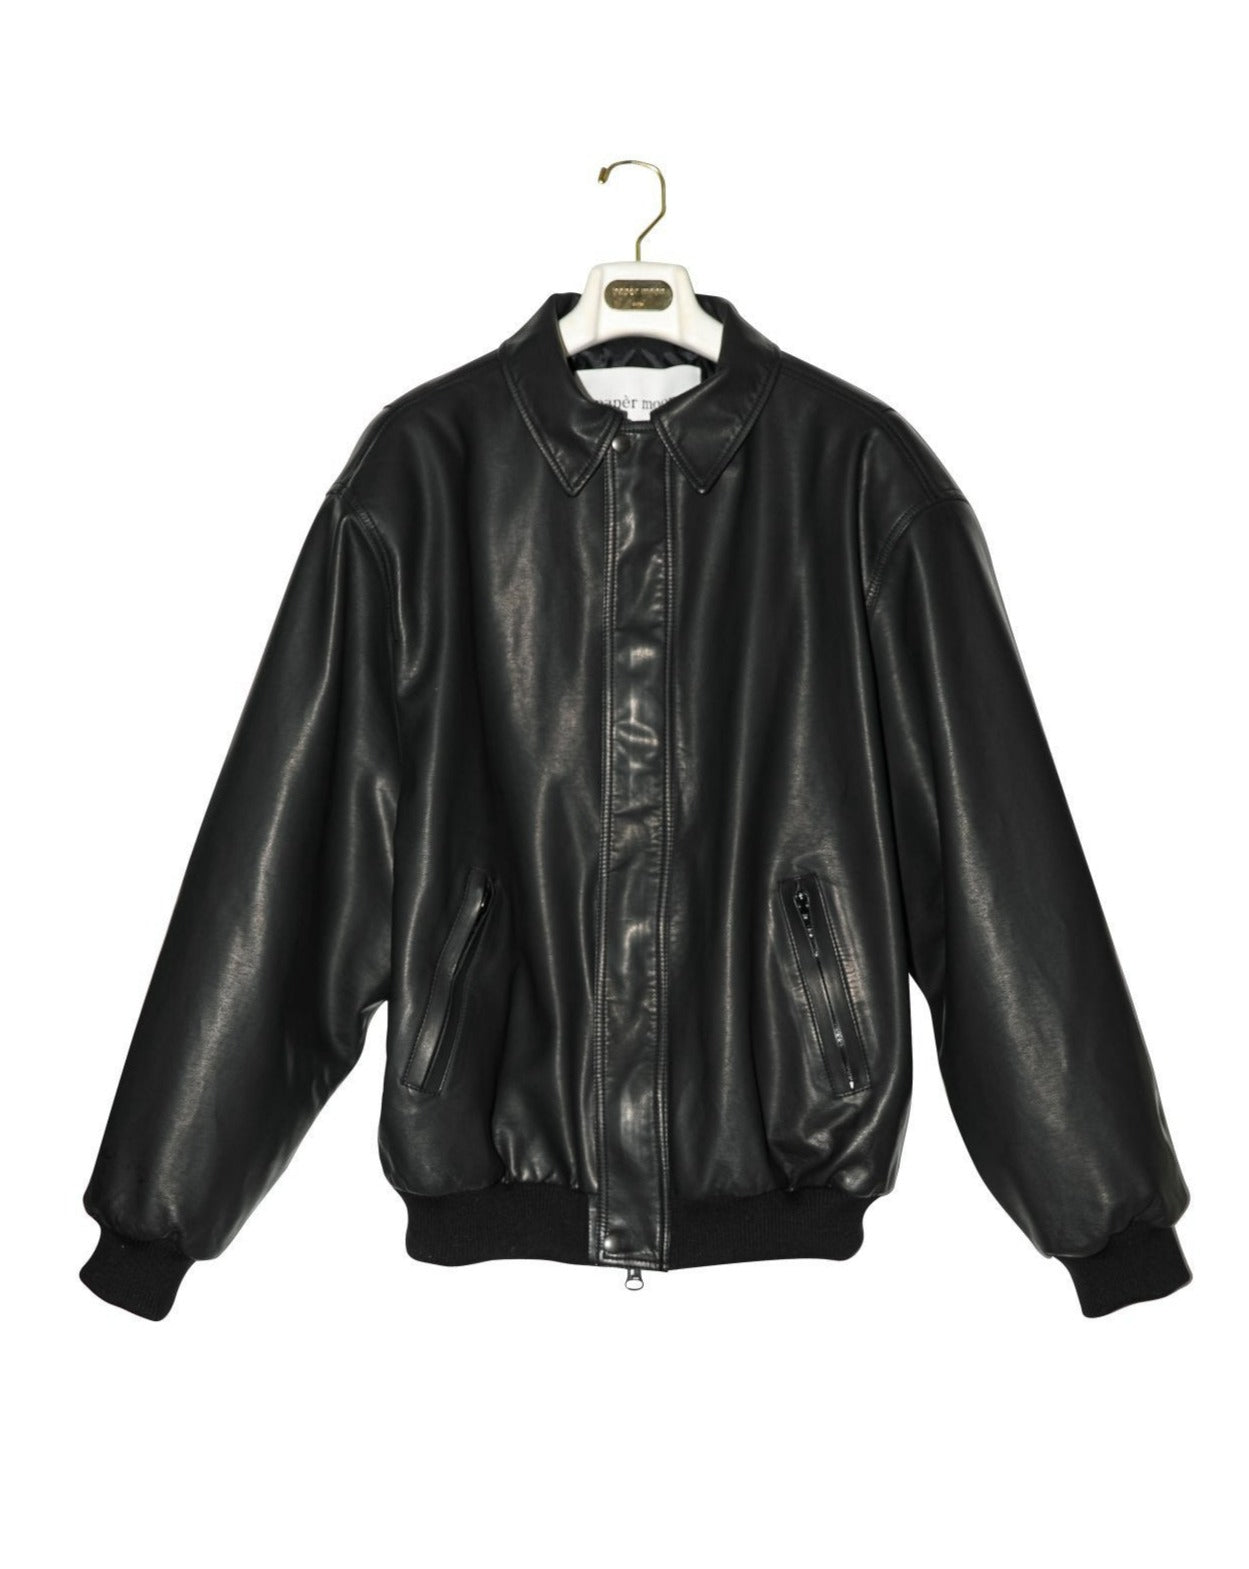 paper moon leather fur jacket - レザージャケット